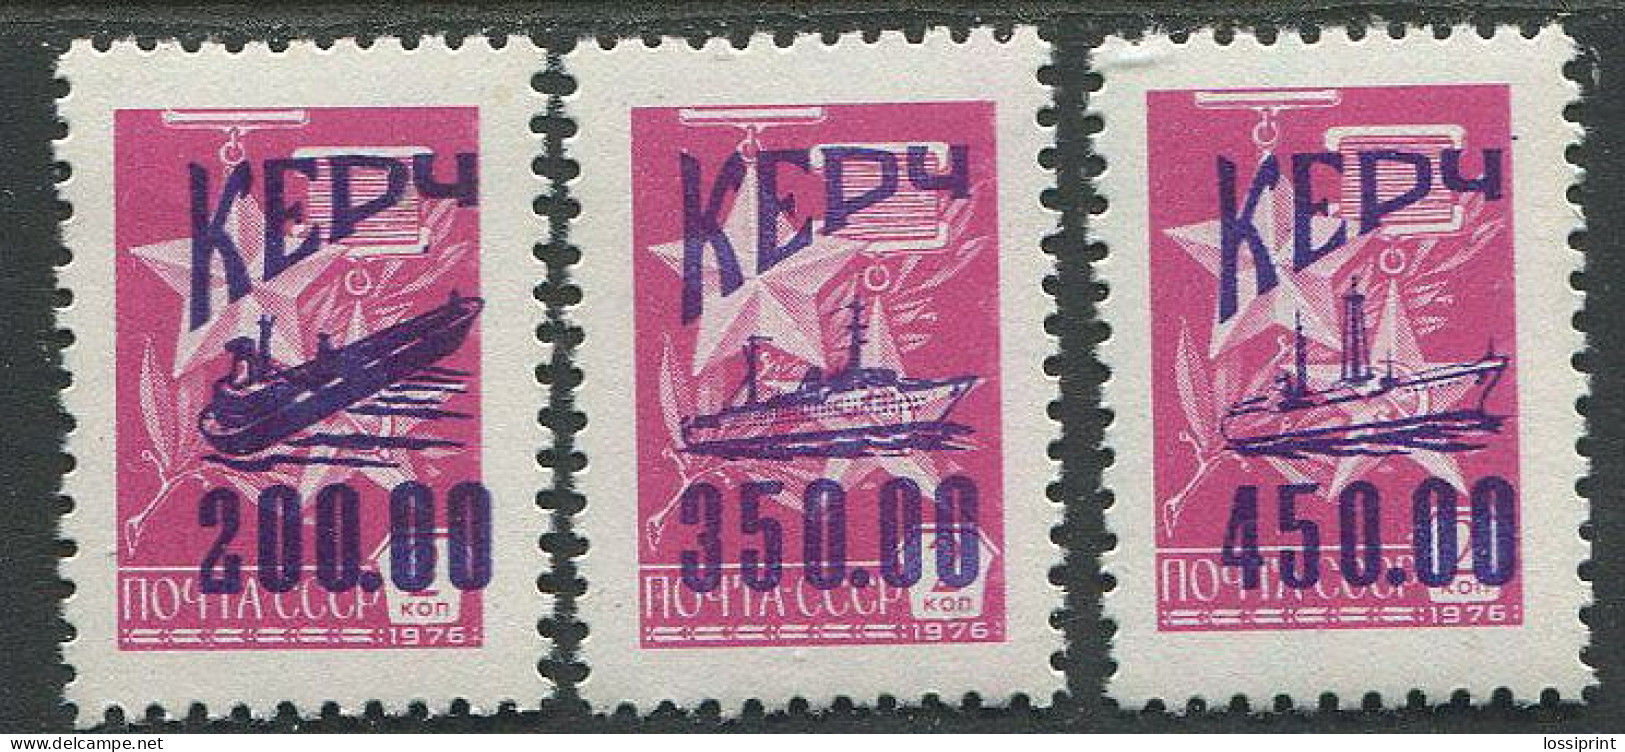 Ukraina:Ukraine:Unused Overprinted Stamps, Krim Peninsula, Kerts, Ships, Probably 1993, MNH - Ukraine